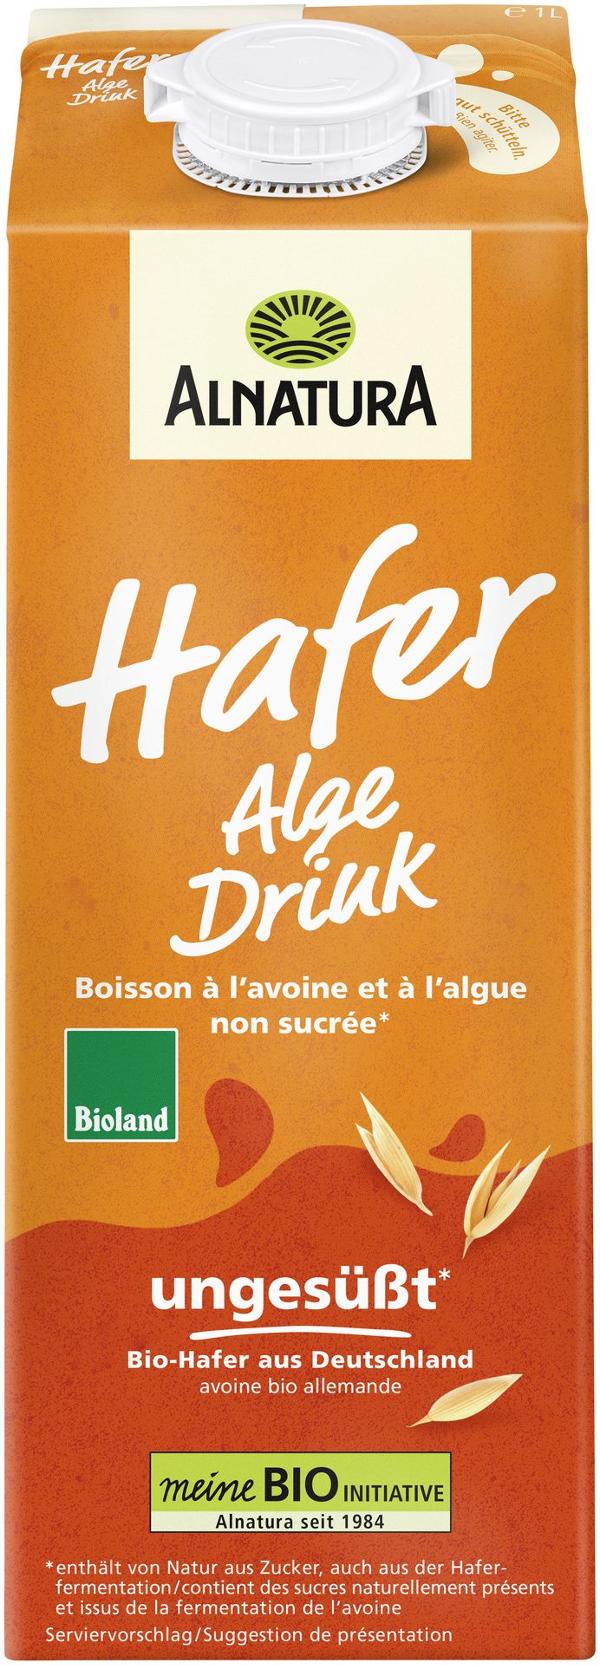 Produktfoto zu Hafer Alge Drink 1l Alnatura